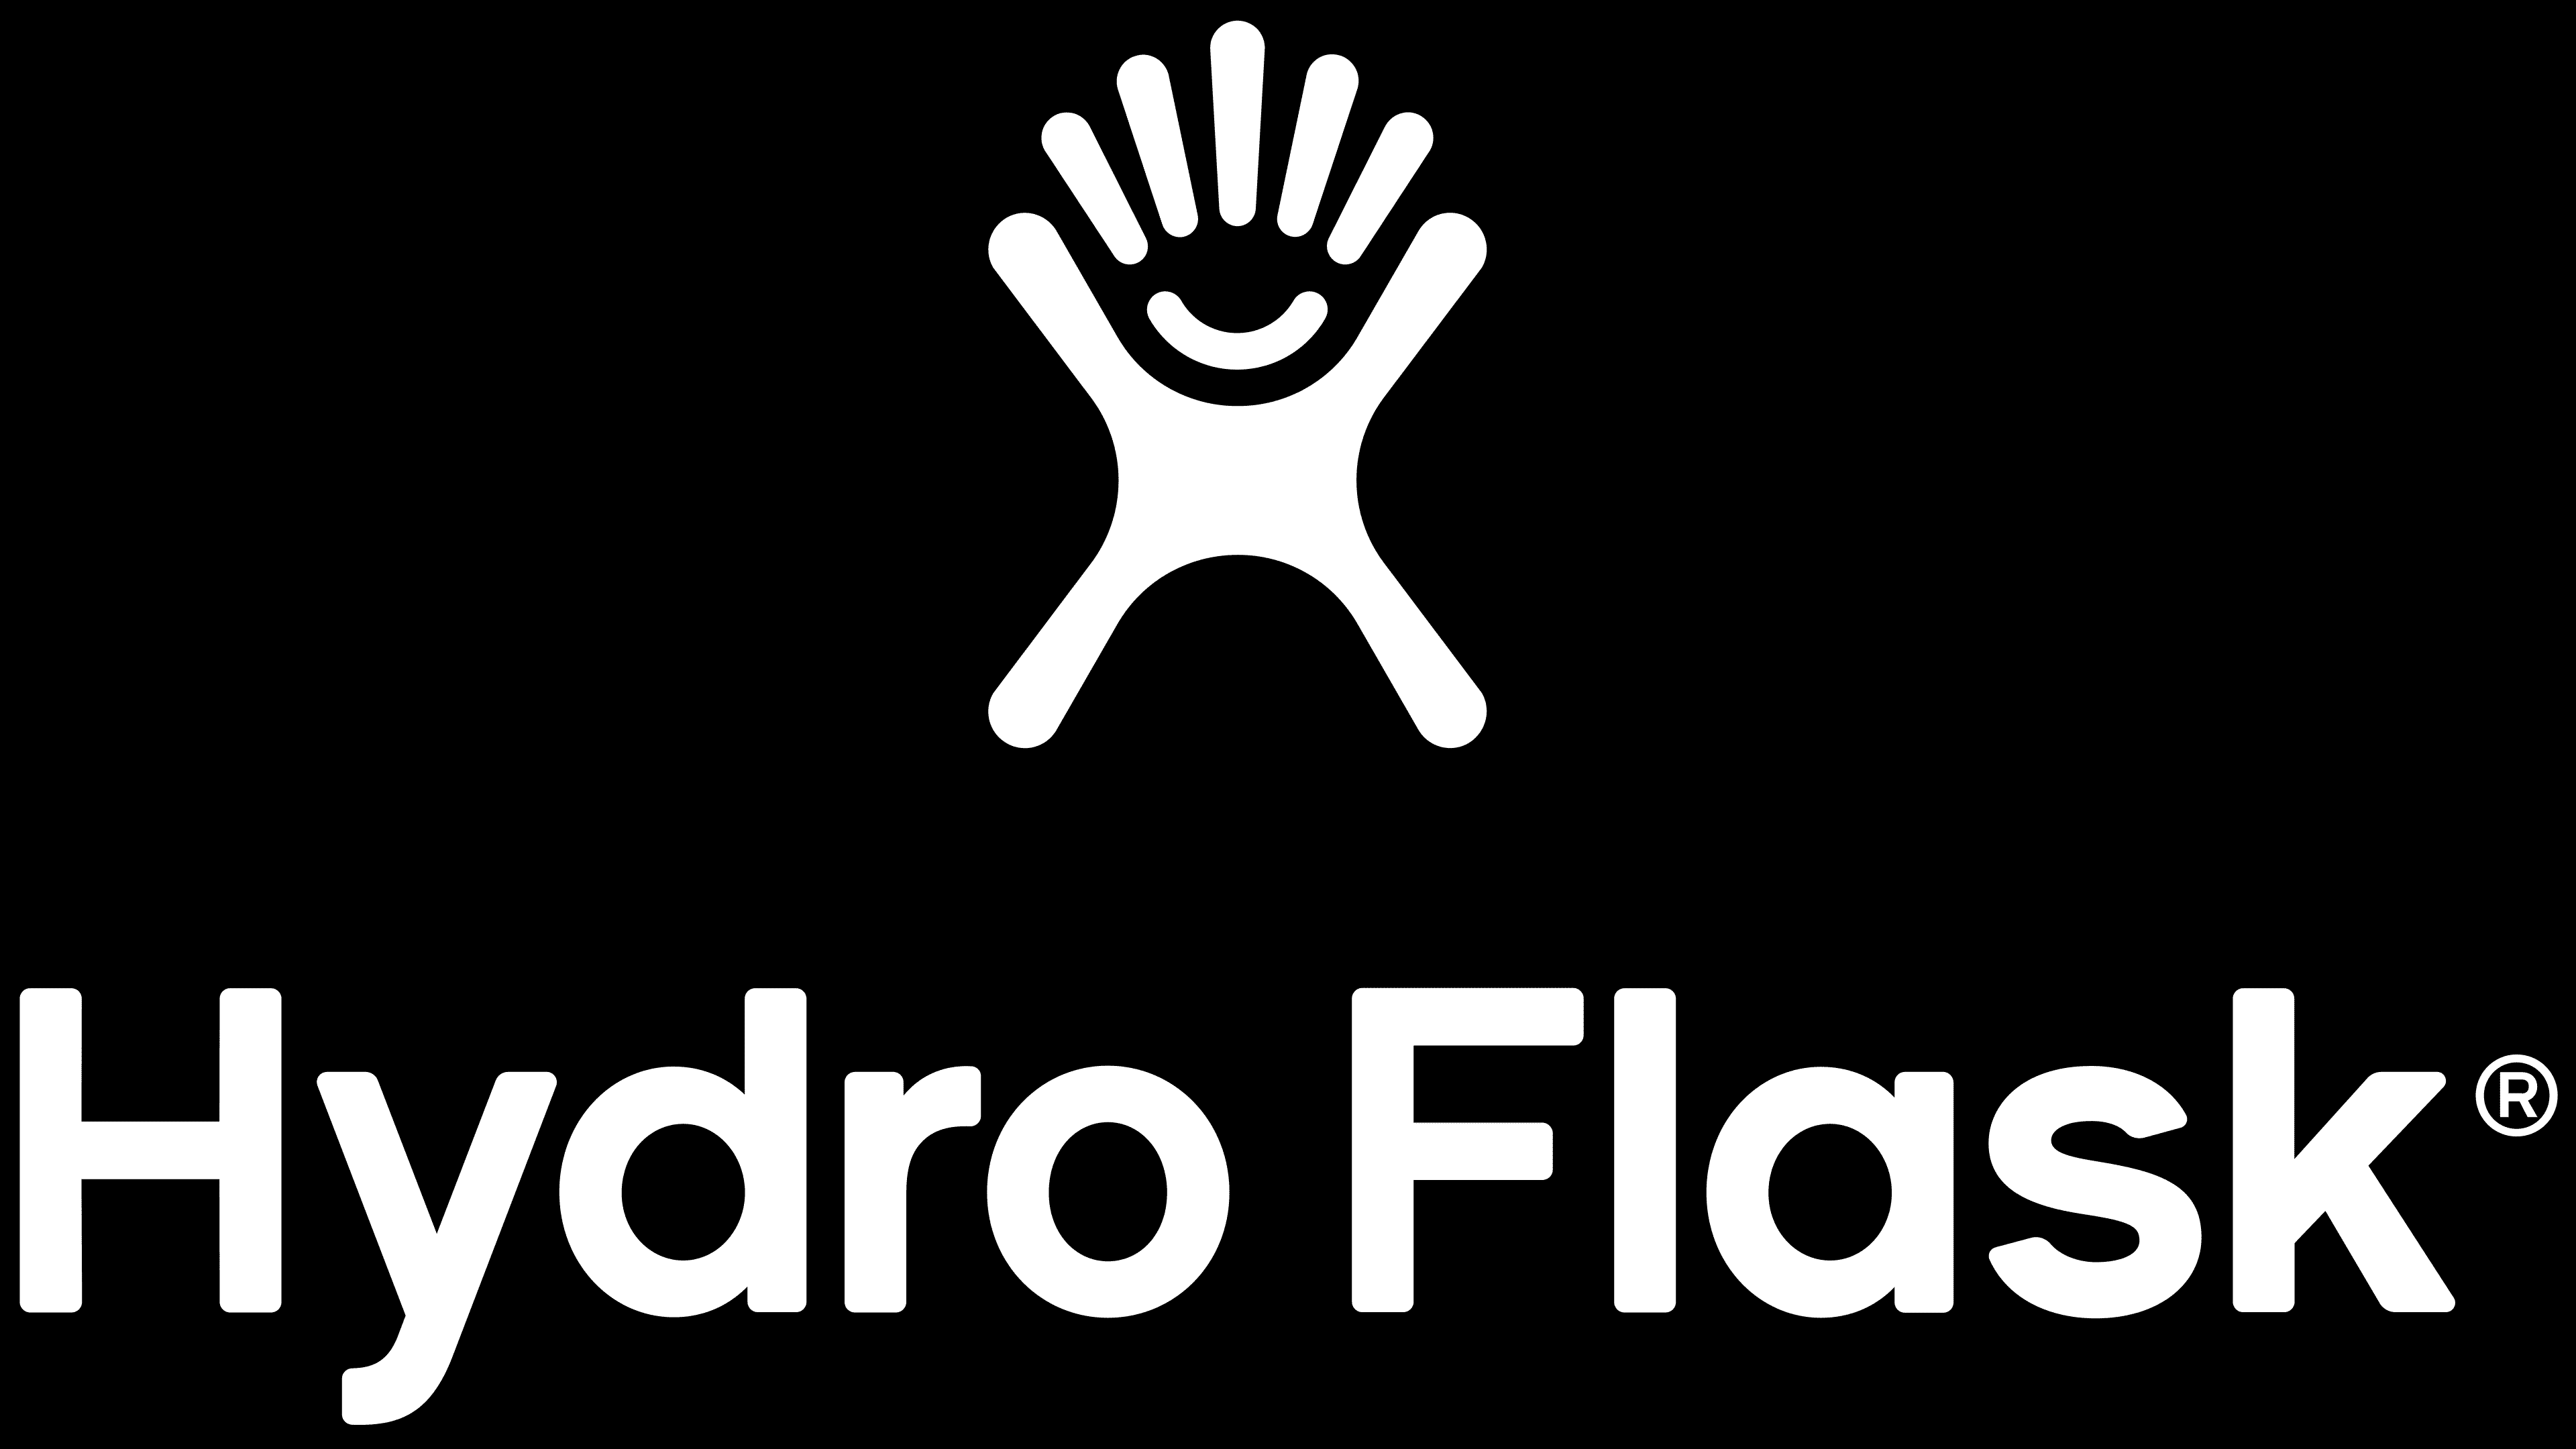 Hydro flask